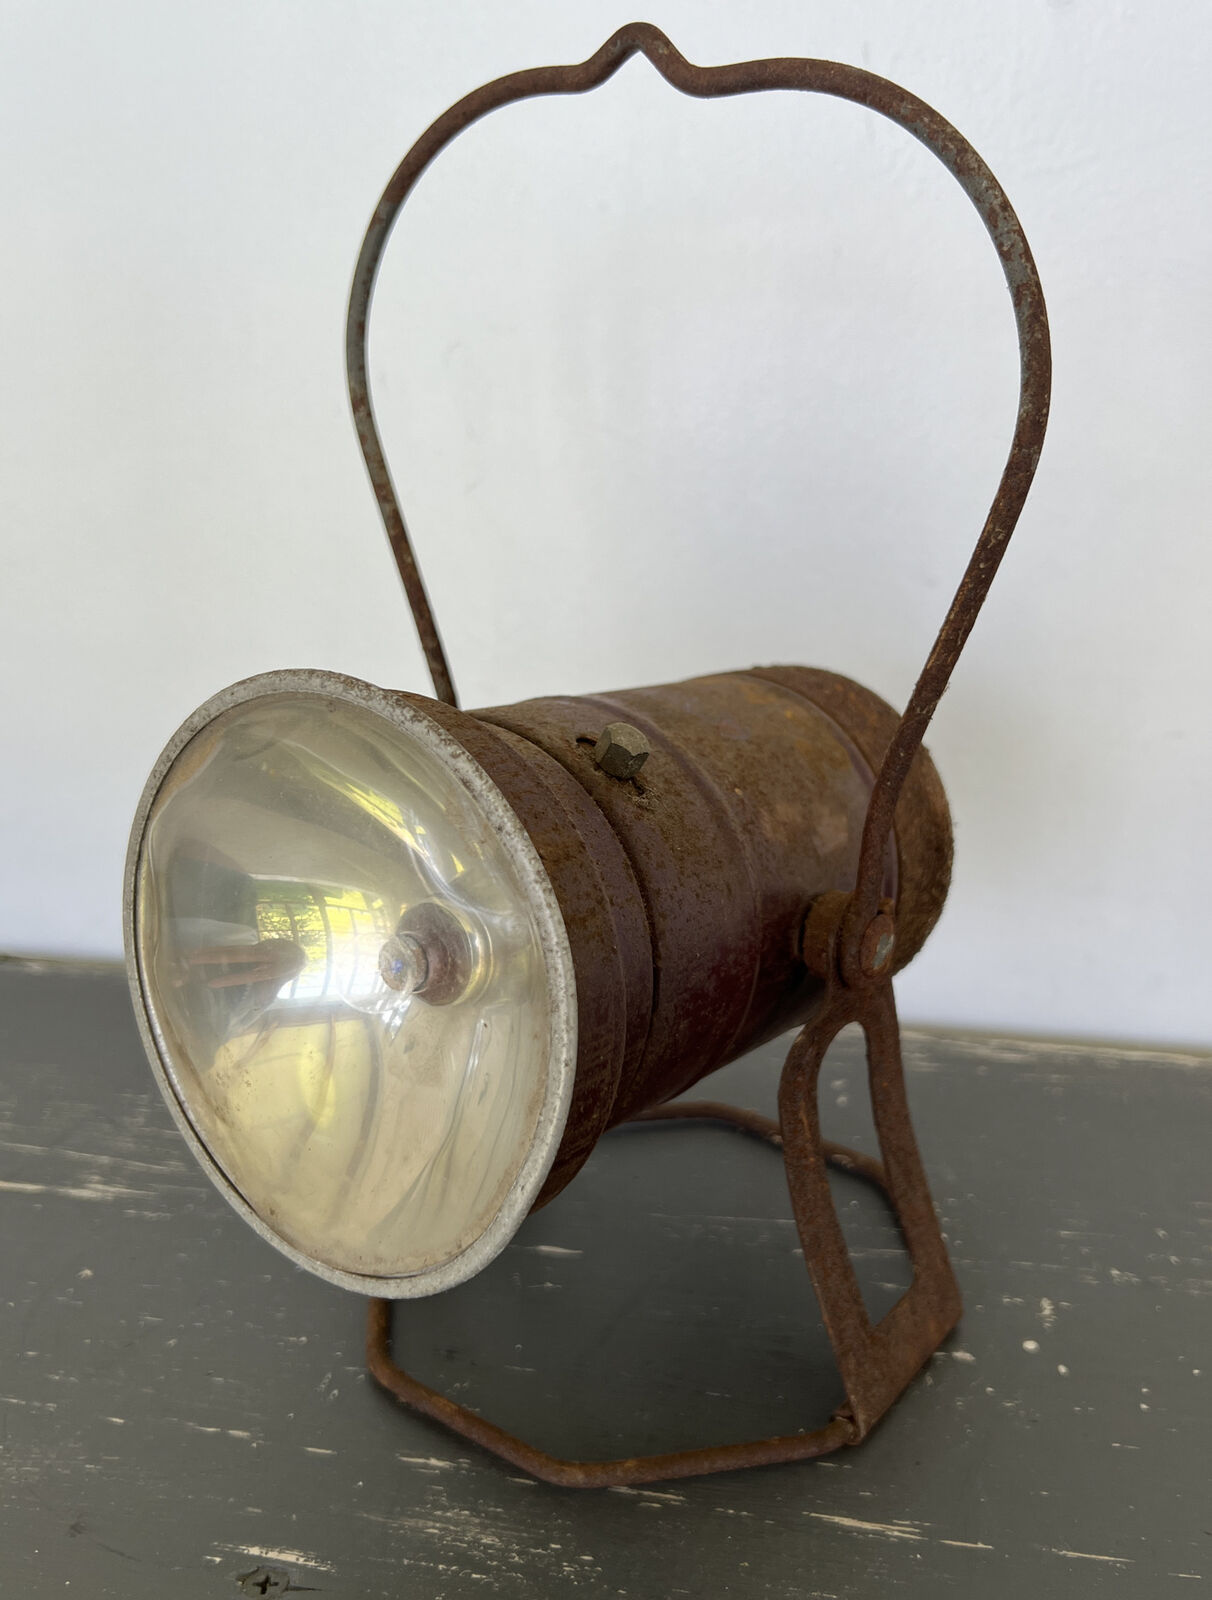 Vintage Ecolite Railroad Lantern NONWORKING for display/Decor/Collectible